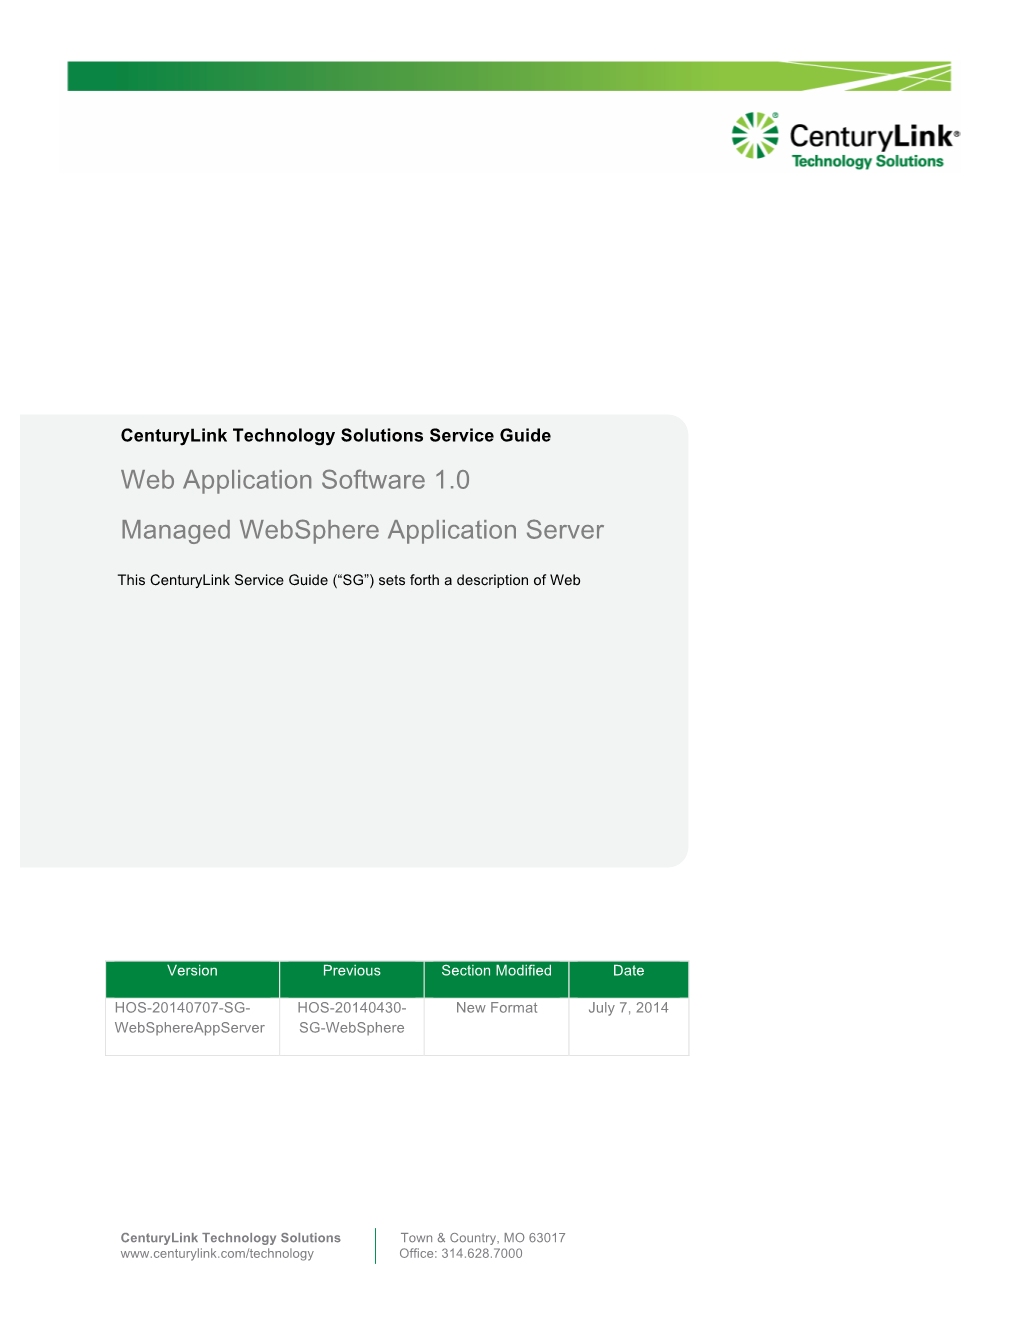 Web Application Software 1.0 Managed Websphere Application Server